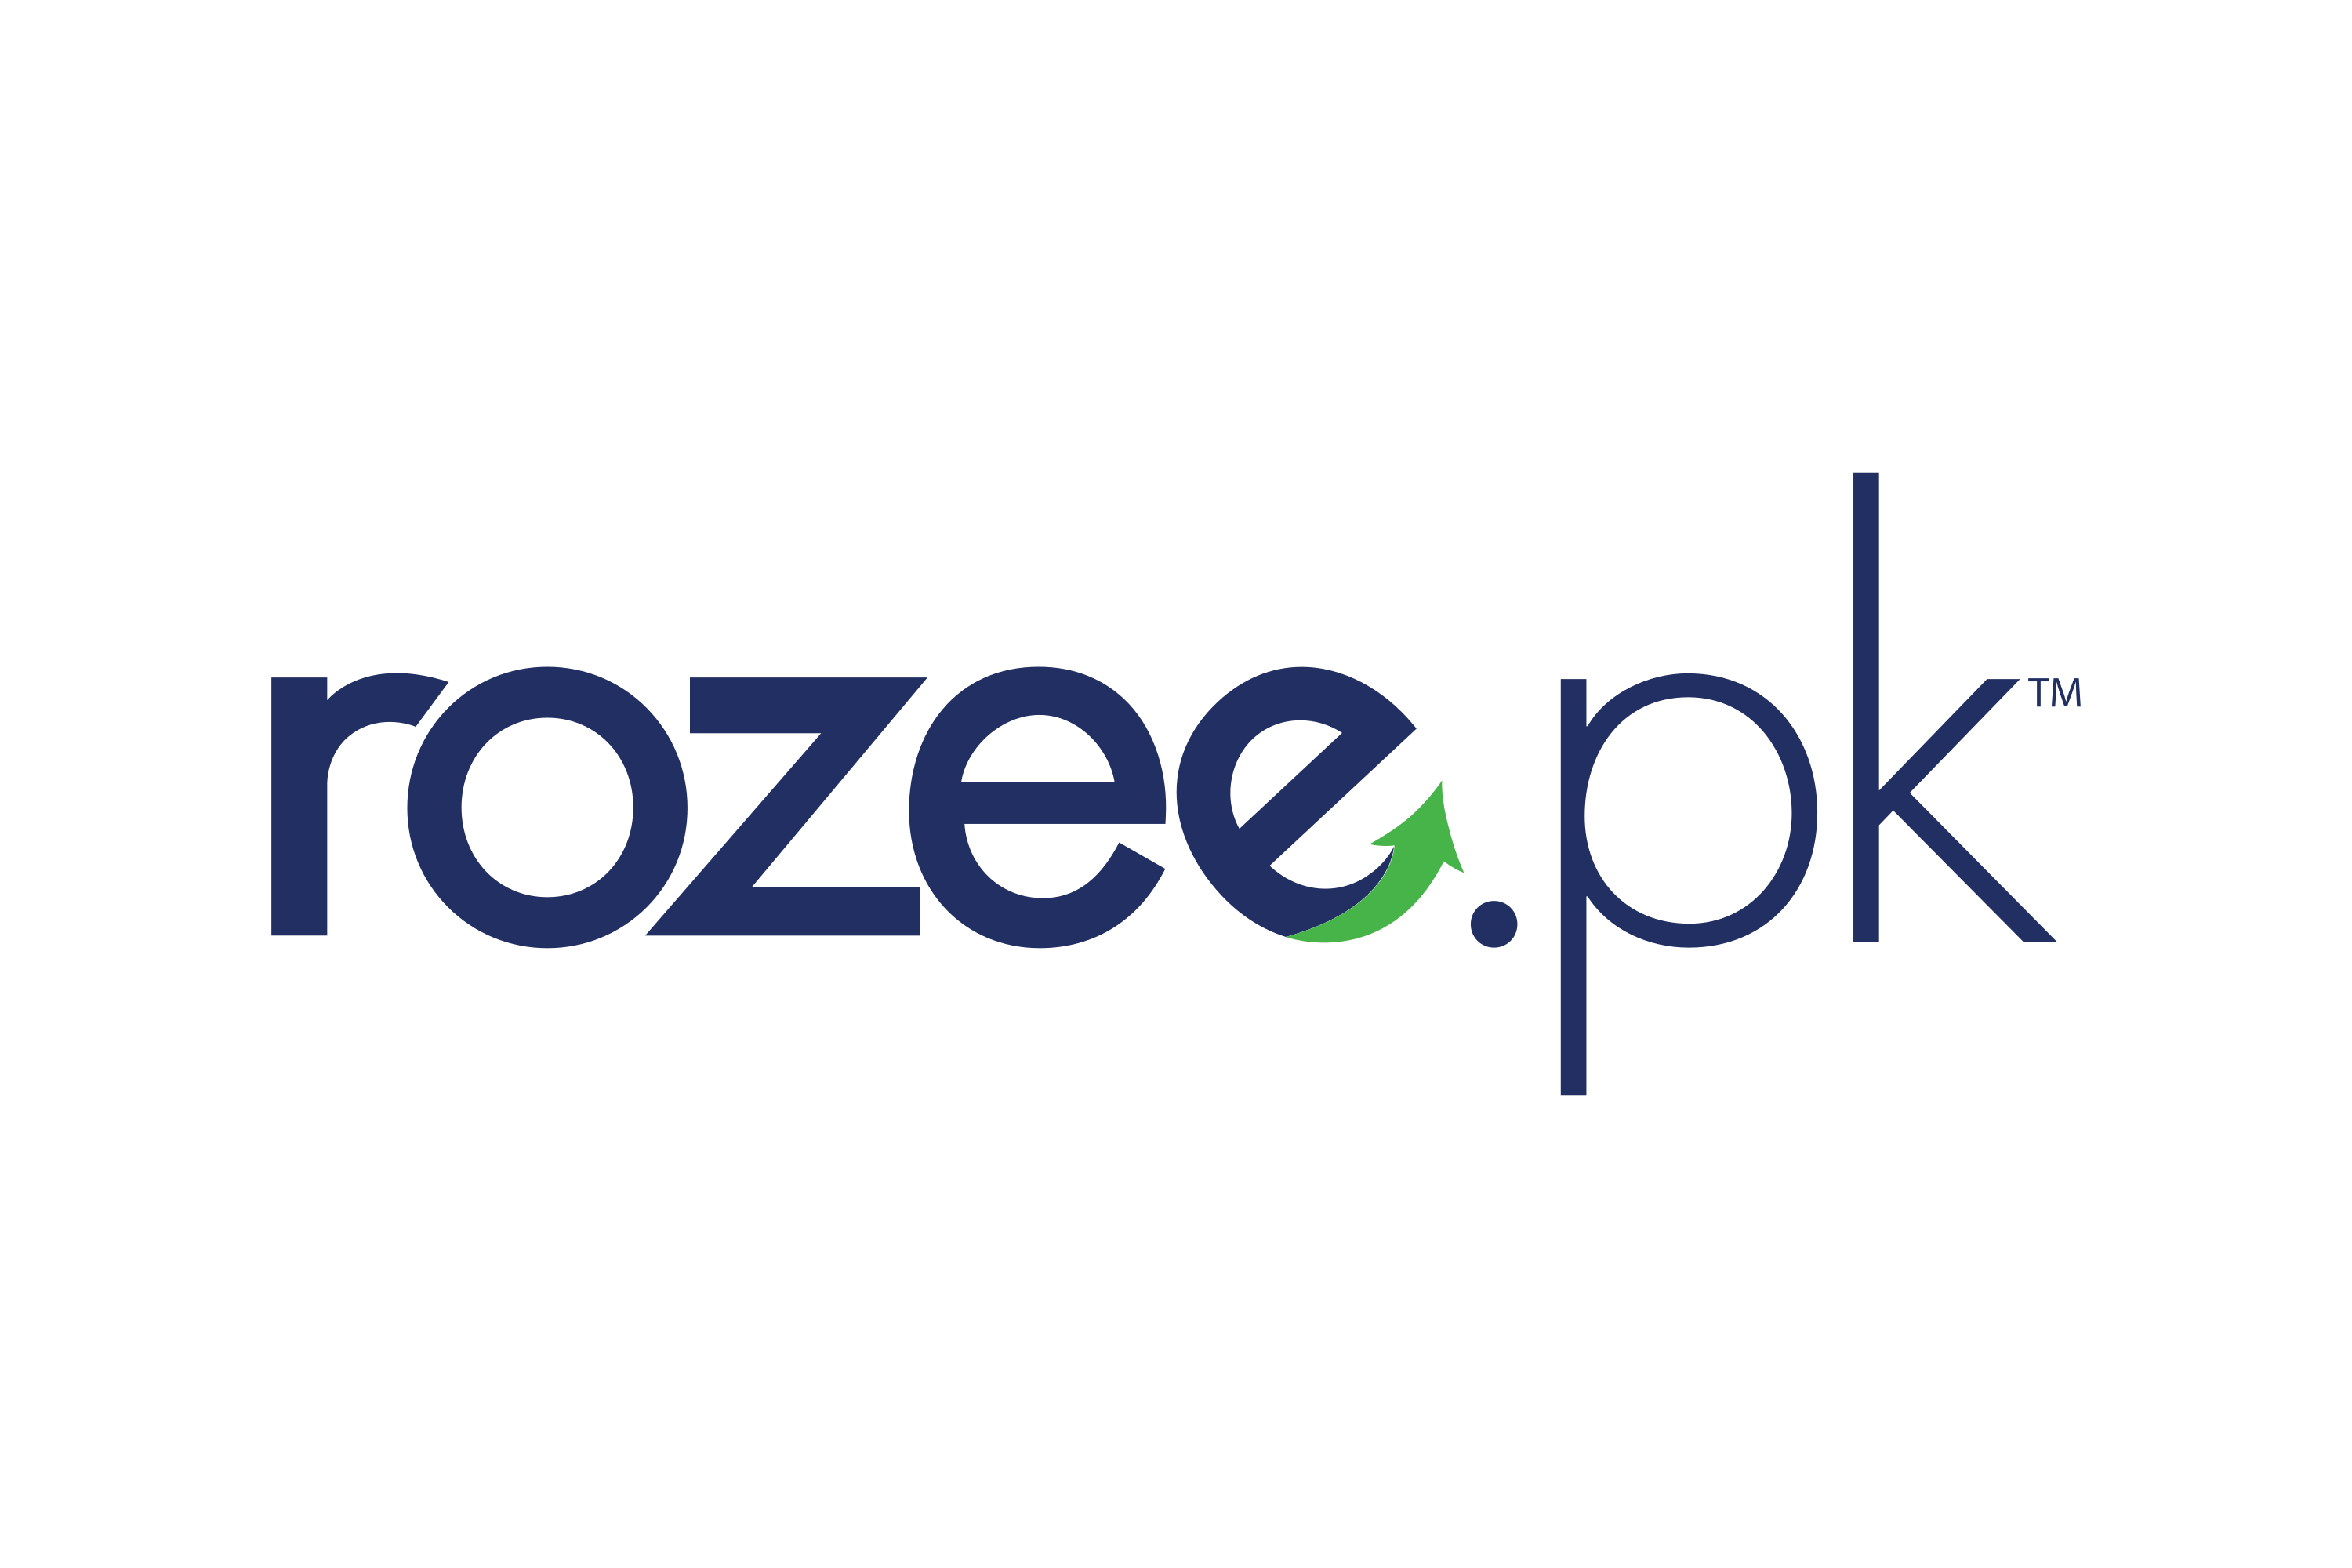 Rozee.pk Logo